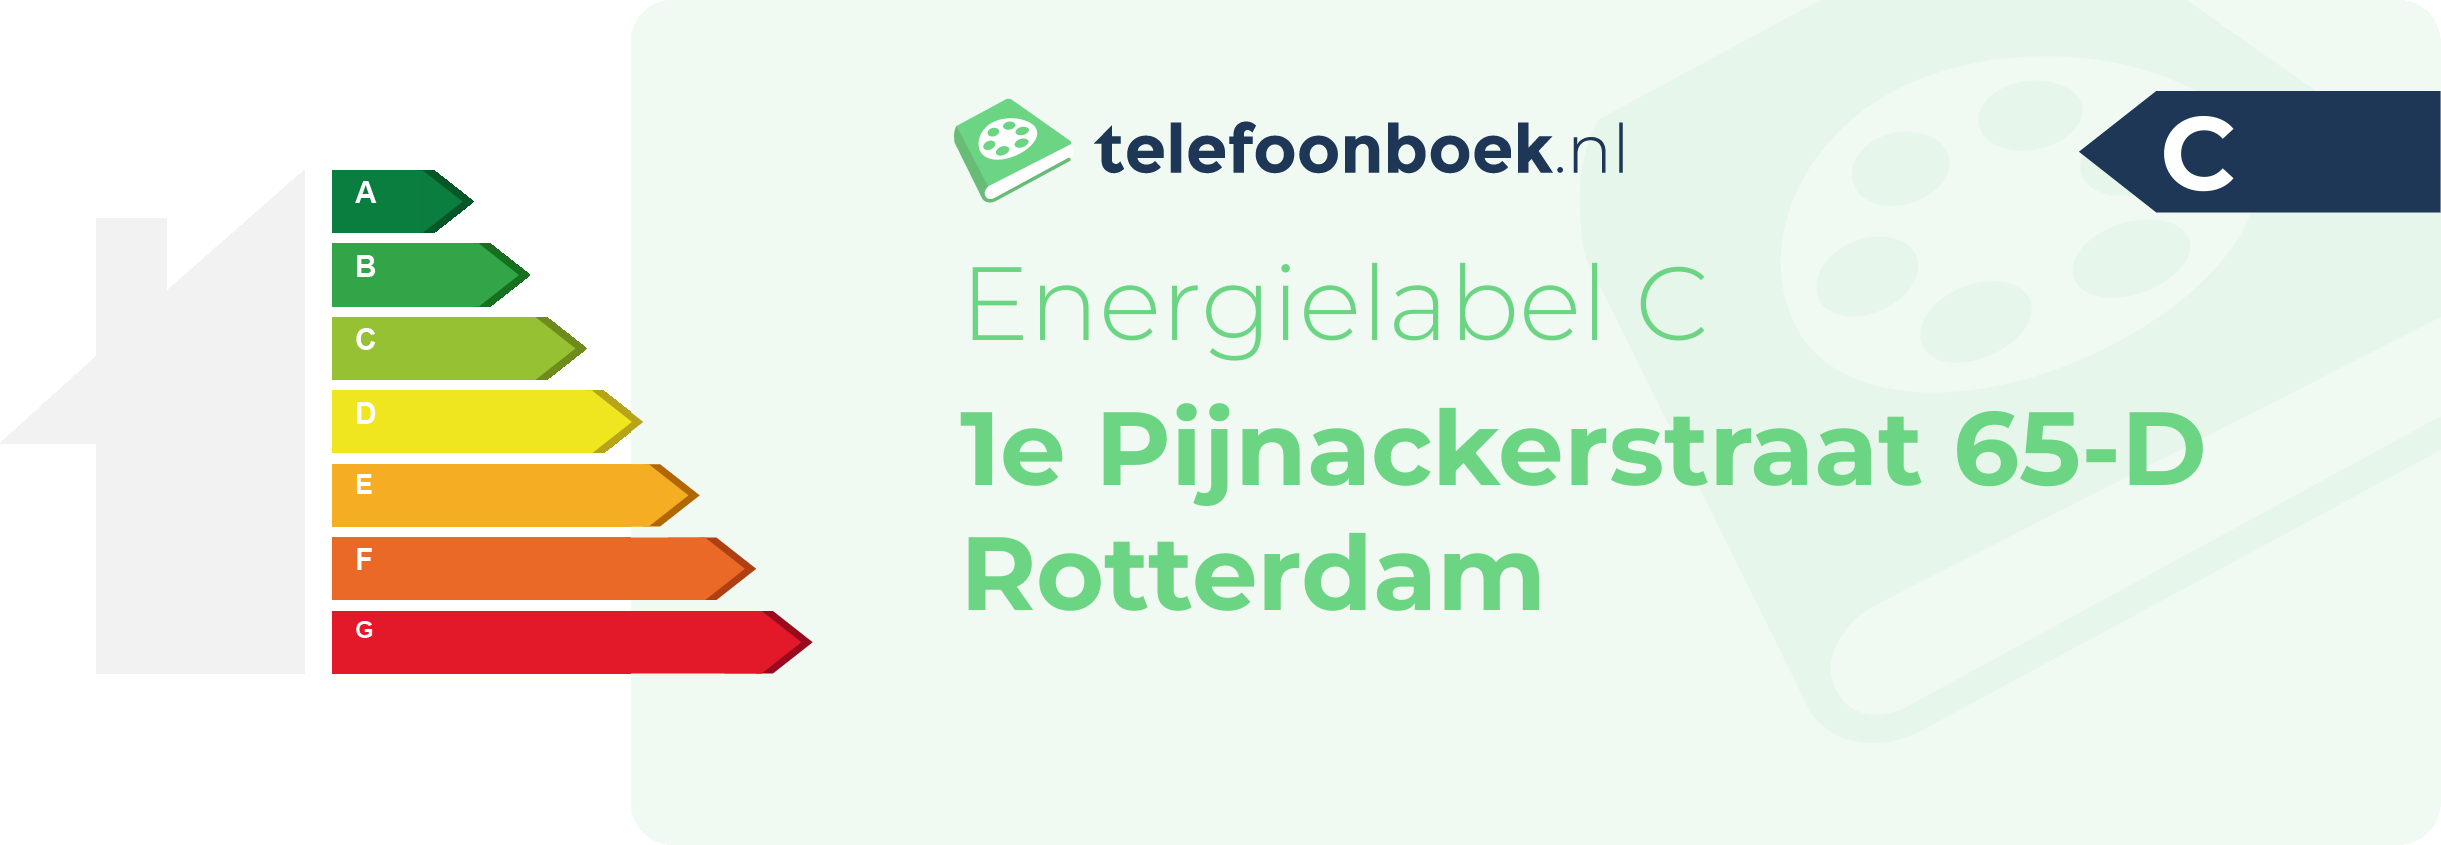 Energielabel 1e Pijnackerstraat 65-D Rotterdam